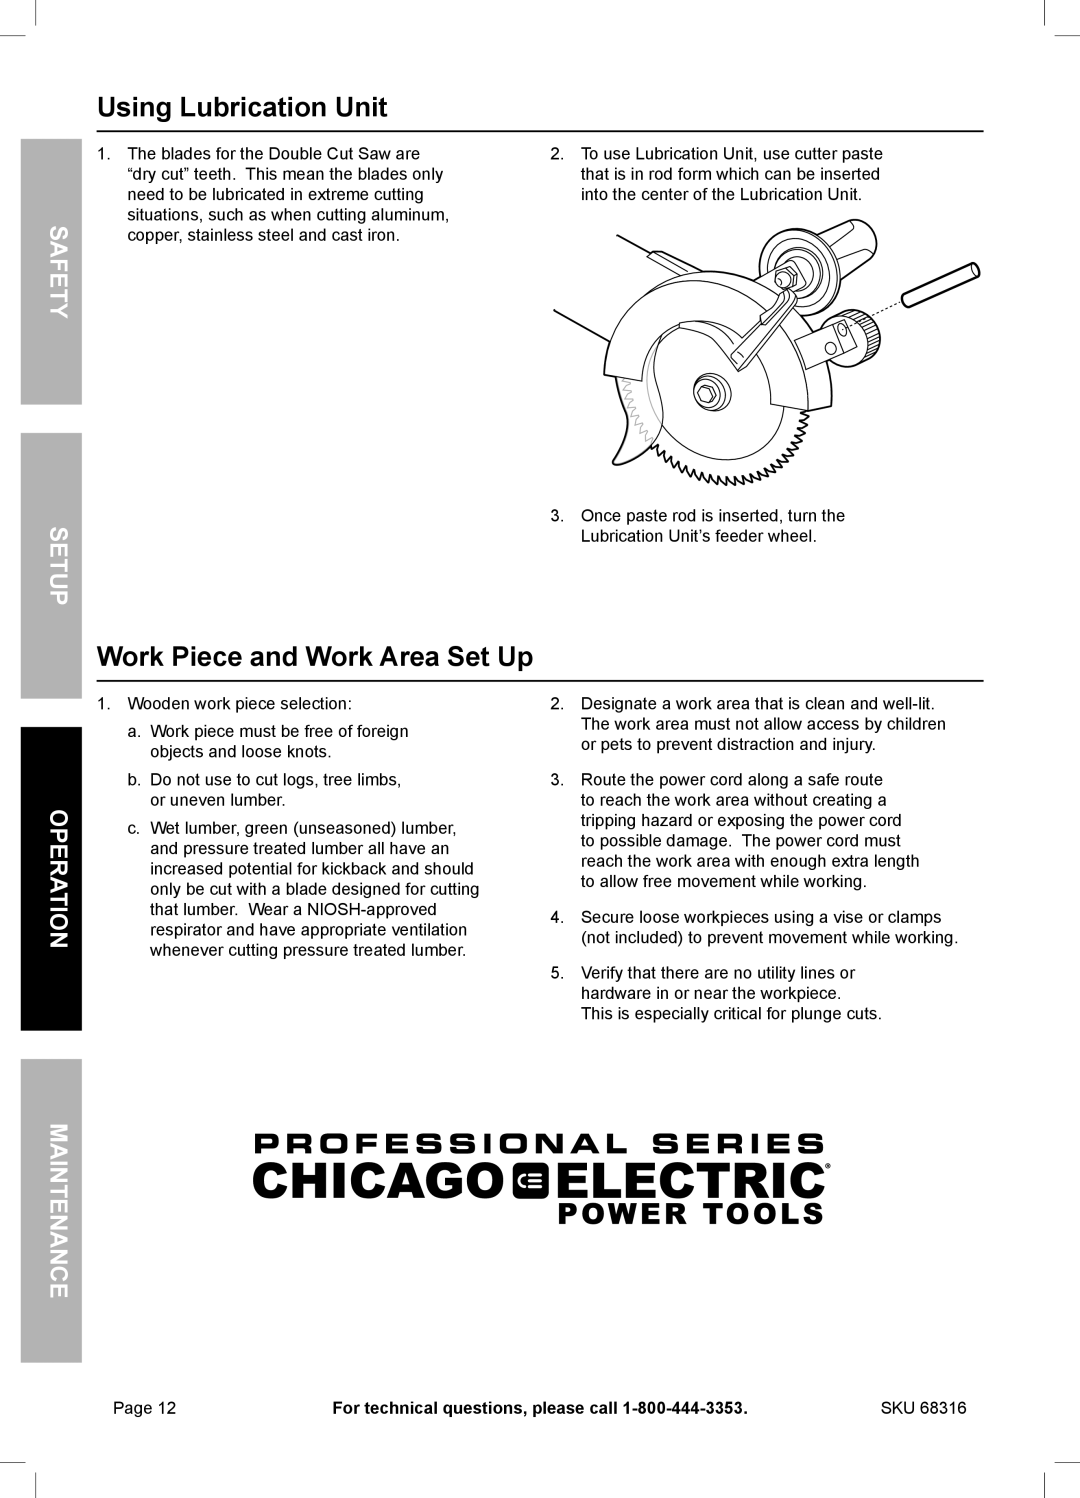 Chicago Electric 68316 Using Lubrication Unit, Work Piece and Work Area Set Up, Operation Maintenance, Safety Setup 